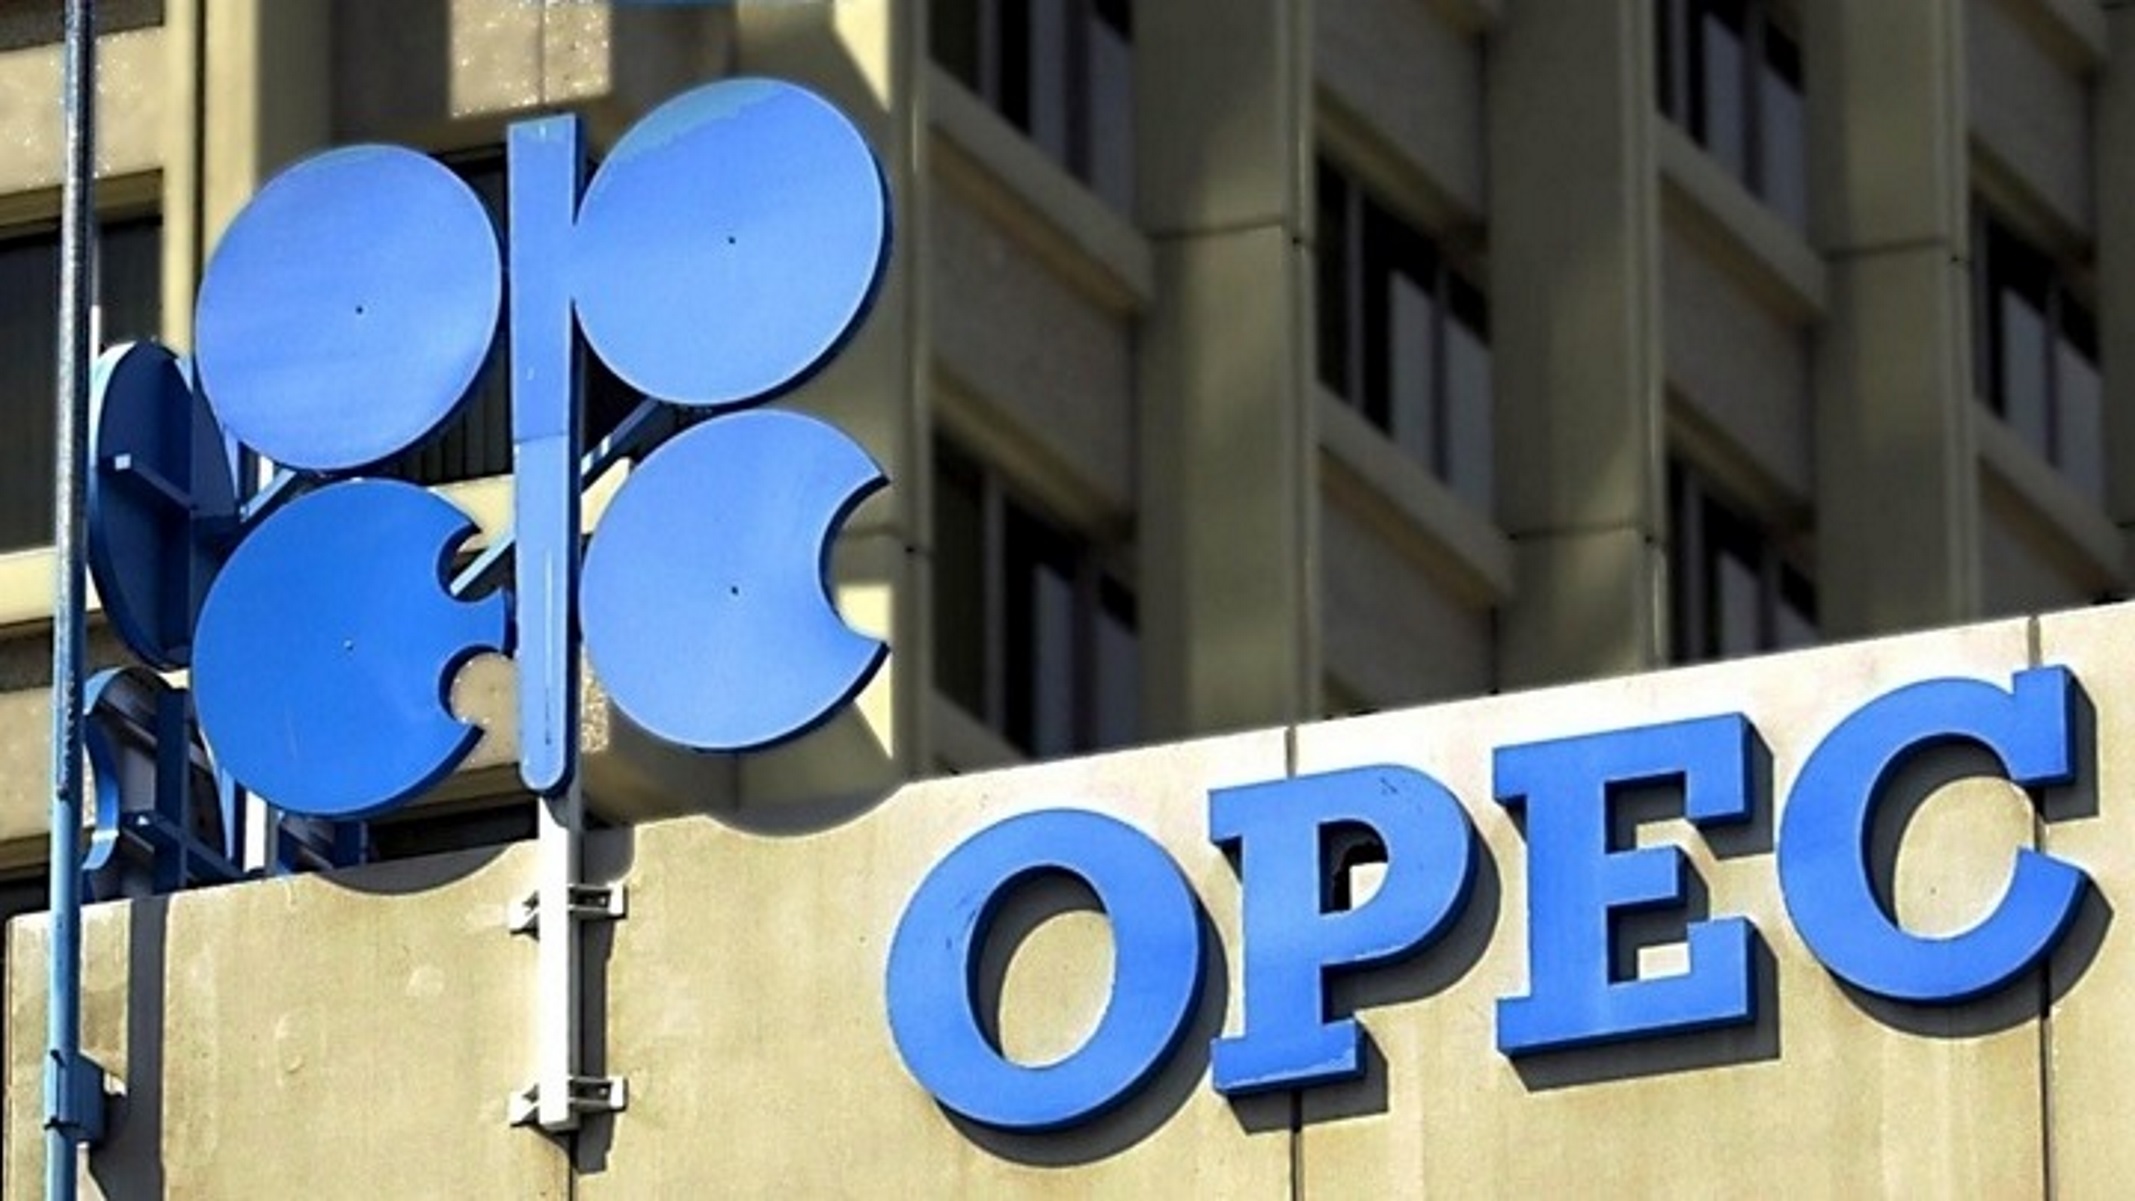 Опек 1 мая. Организация стран экспортёров нефти эмблема. ОПЕК. OPEC + эмблема. Организация ОПЕК.